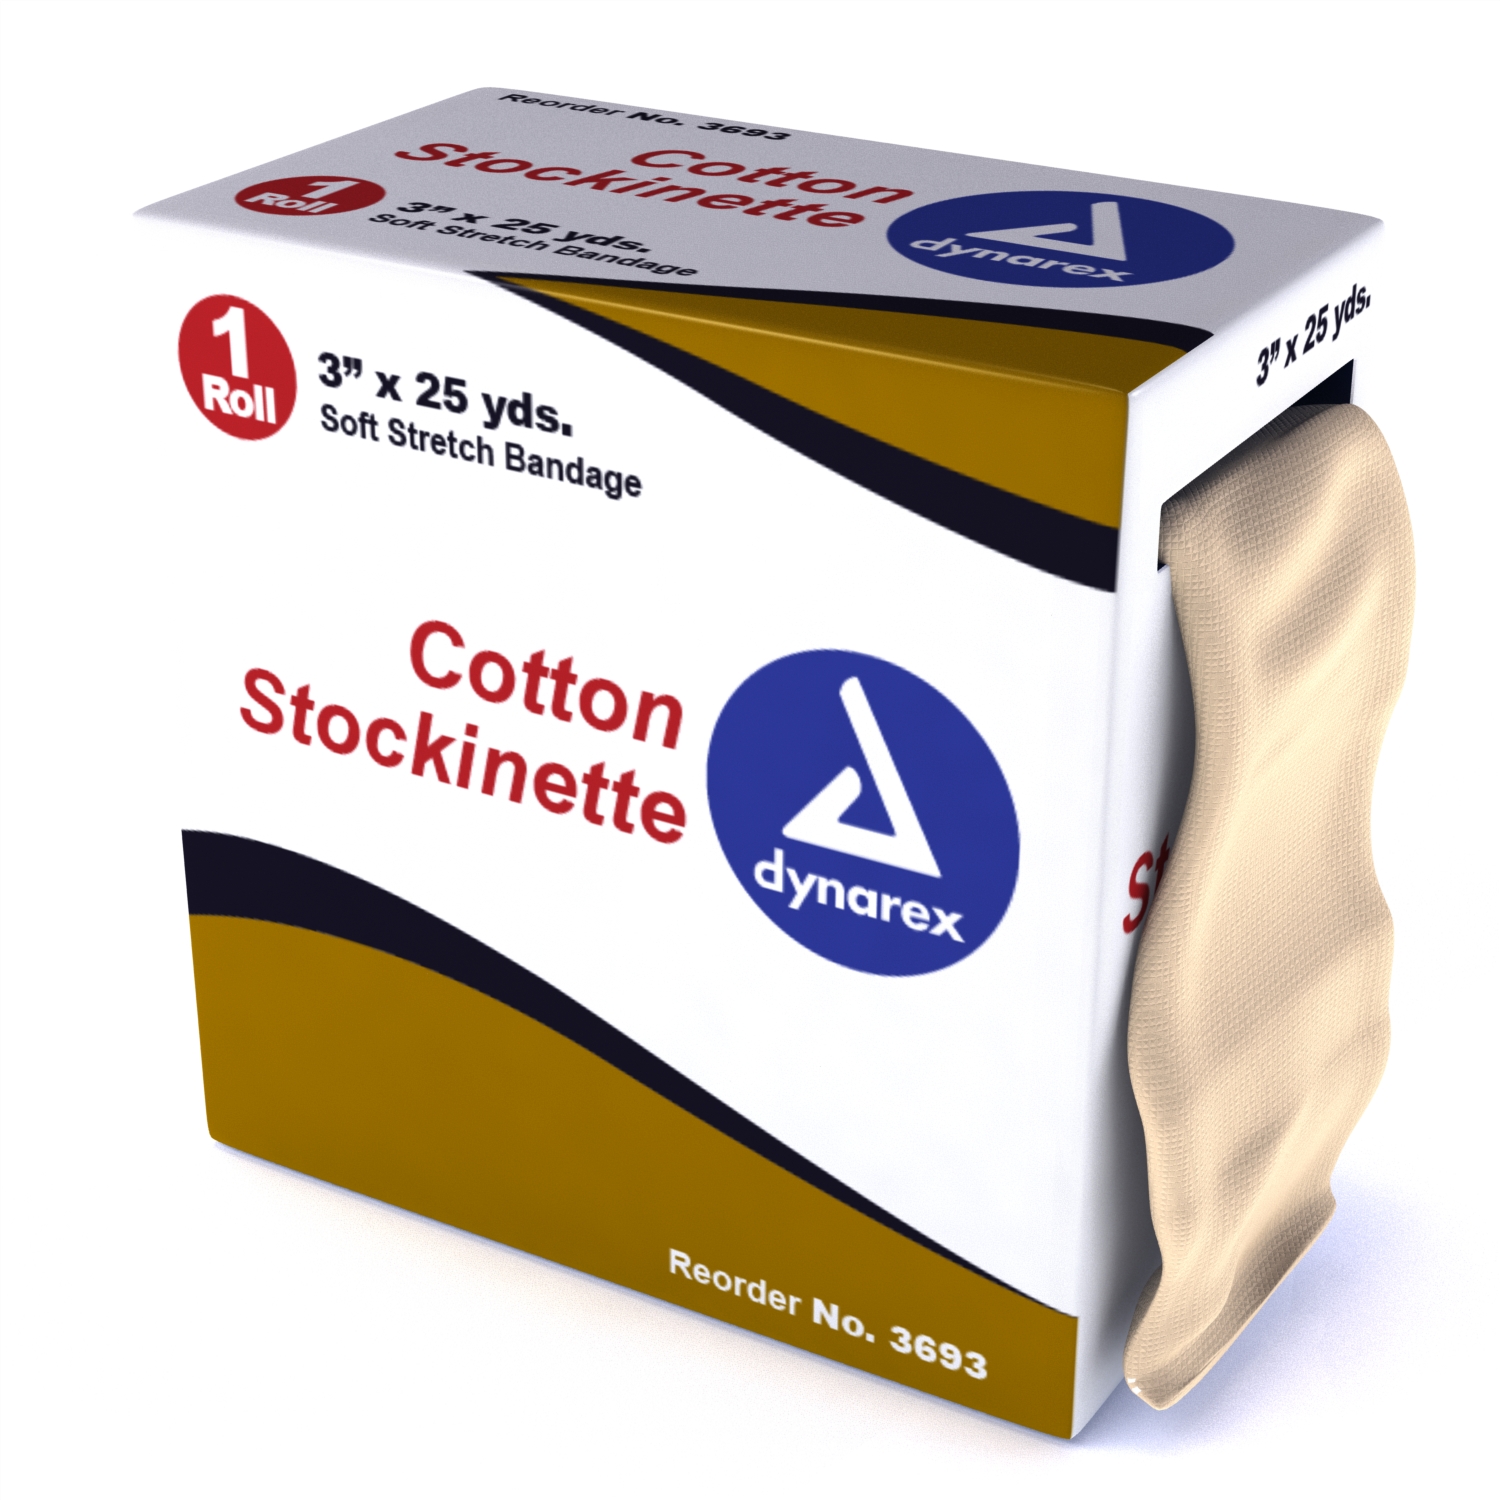 Cotton Stockinette - 3" x 25 yds